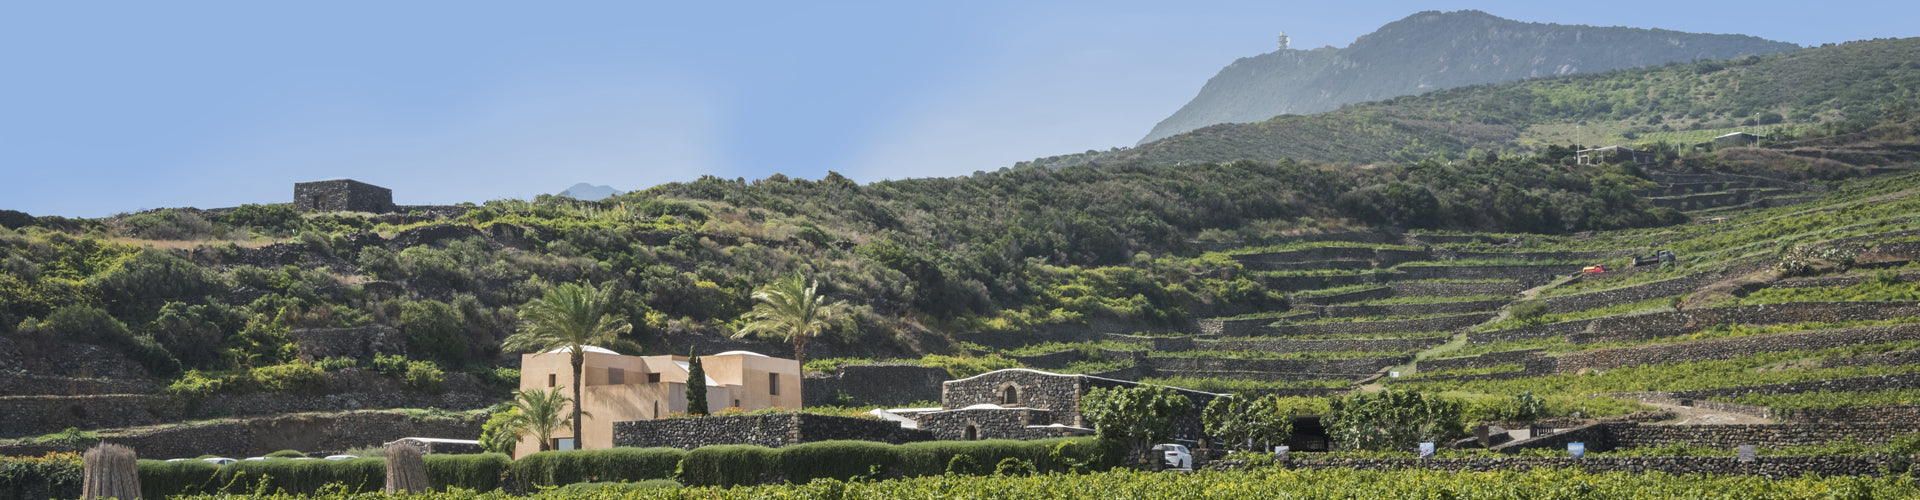 Donnafugata Vineyards in Pantelleria